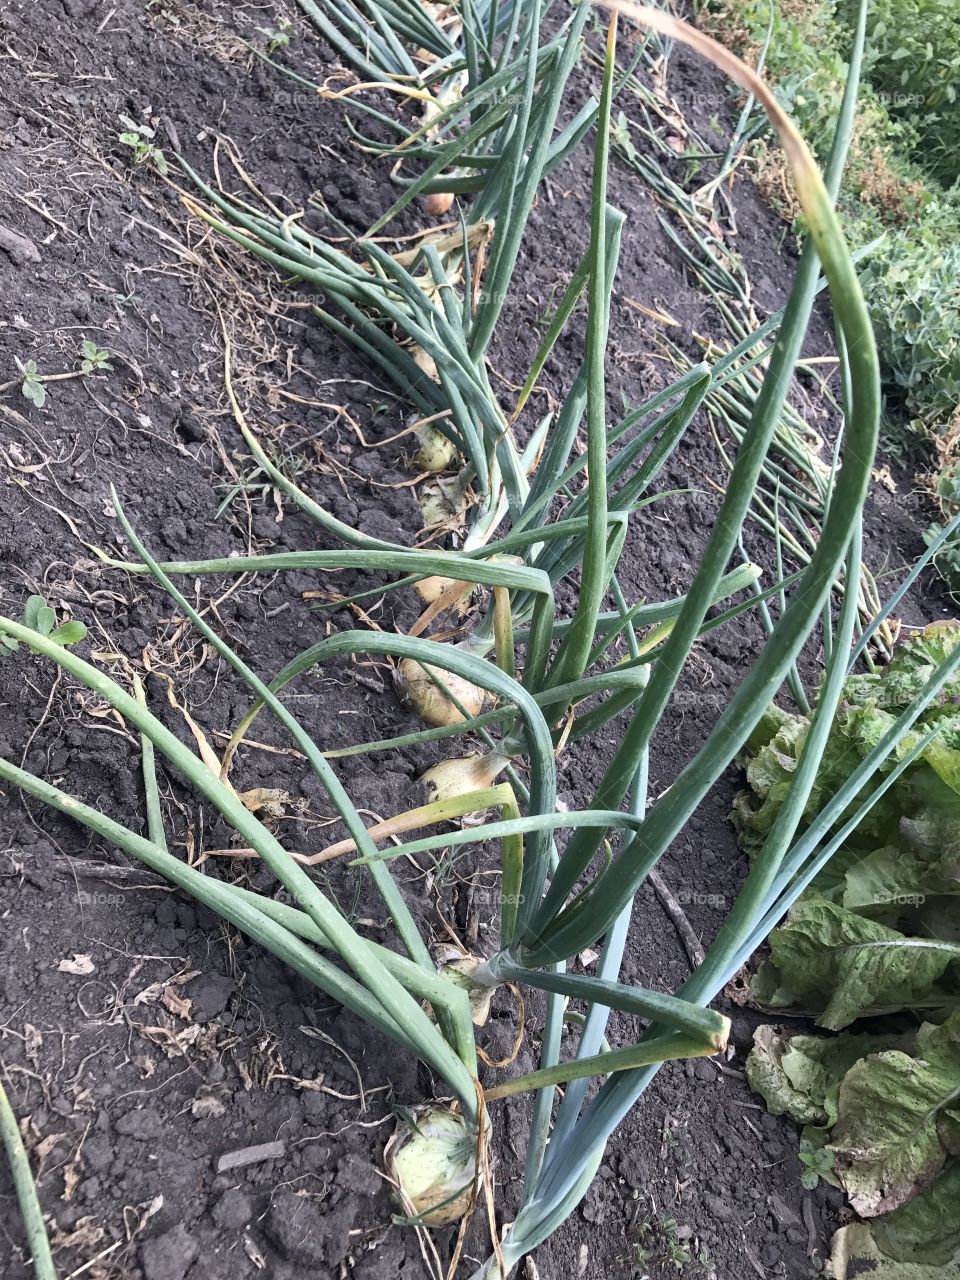 Garden row of onions